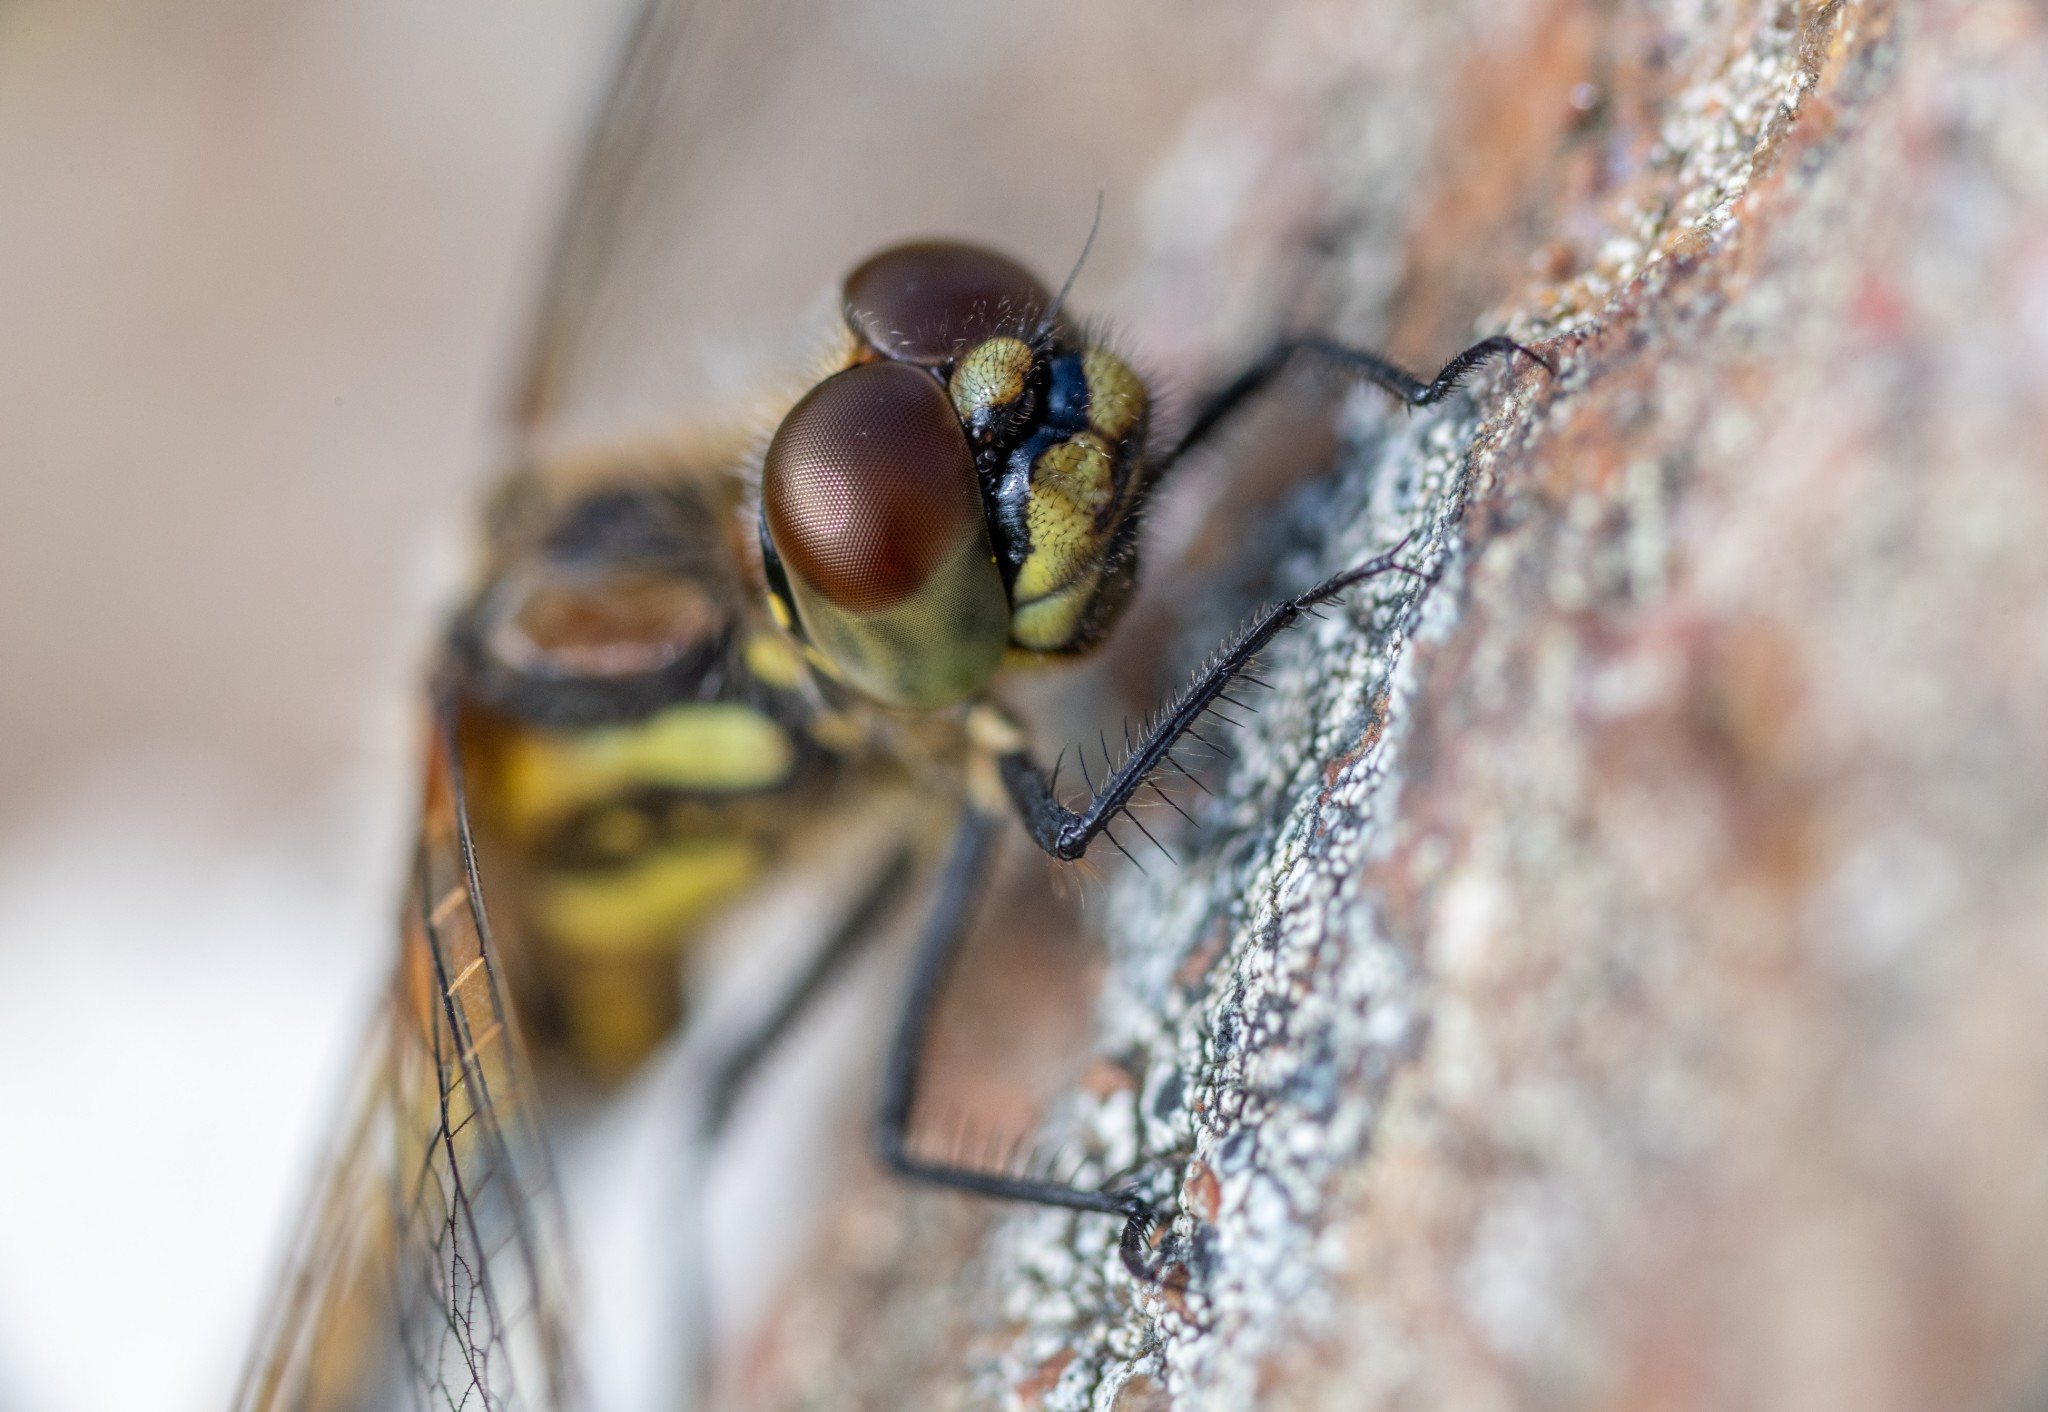 Black darter dragonfly - image by Raymond Besant